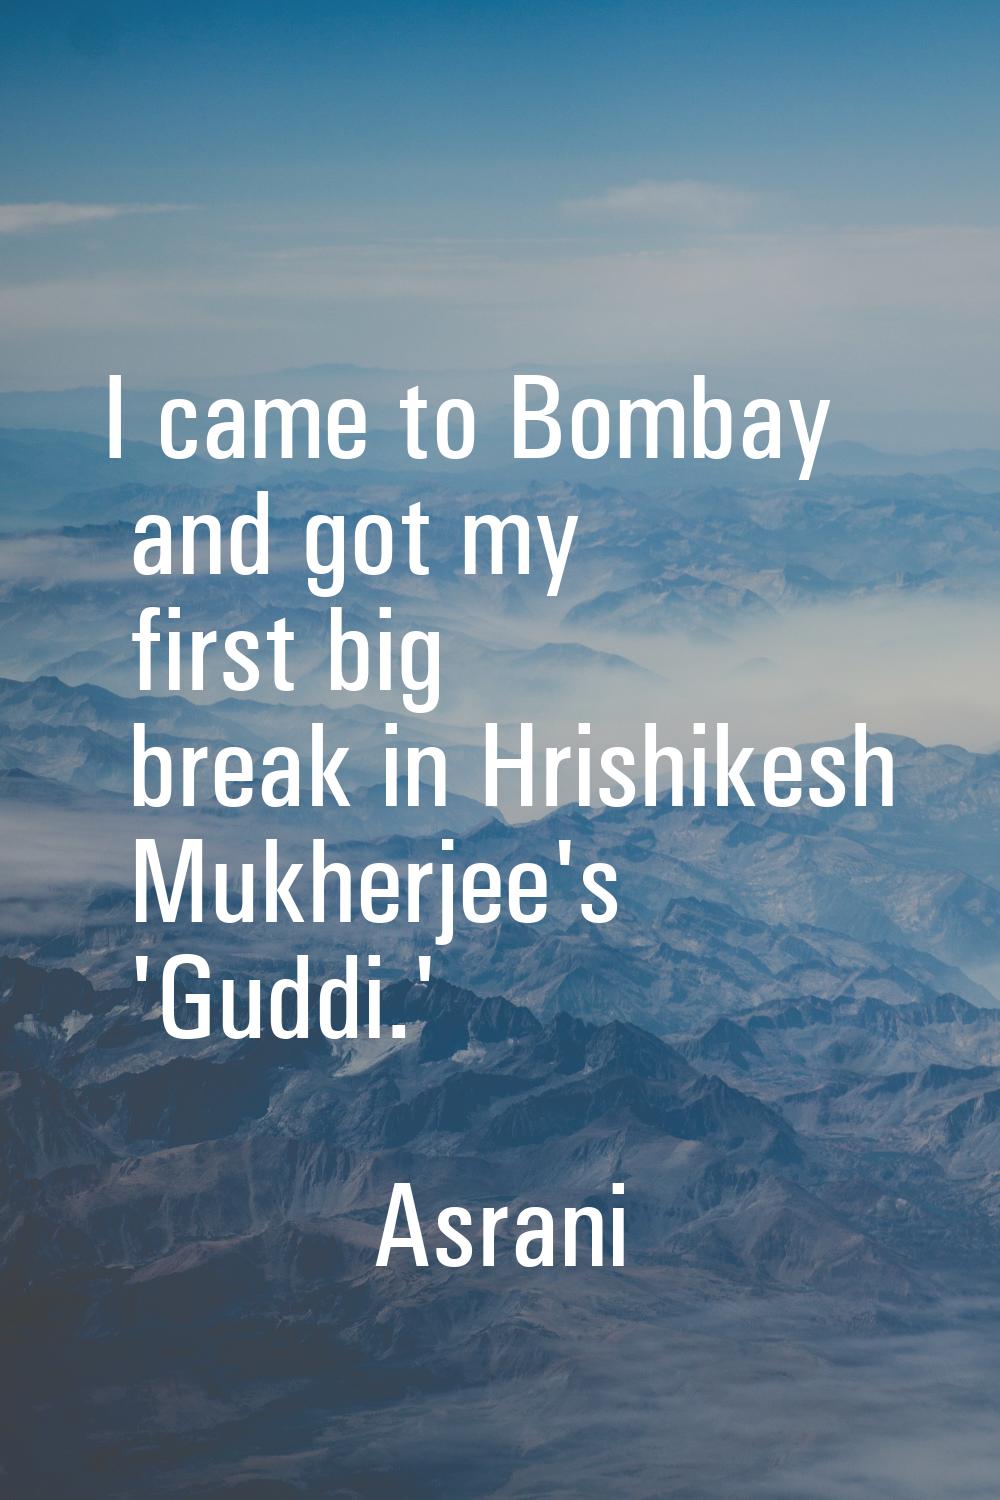 I came to Bombay and got my first big break in Hrishikesh Mukherjee's 'Guddi.'